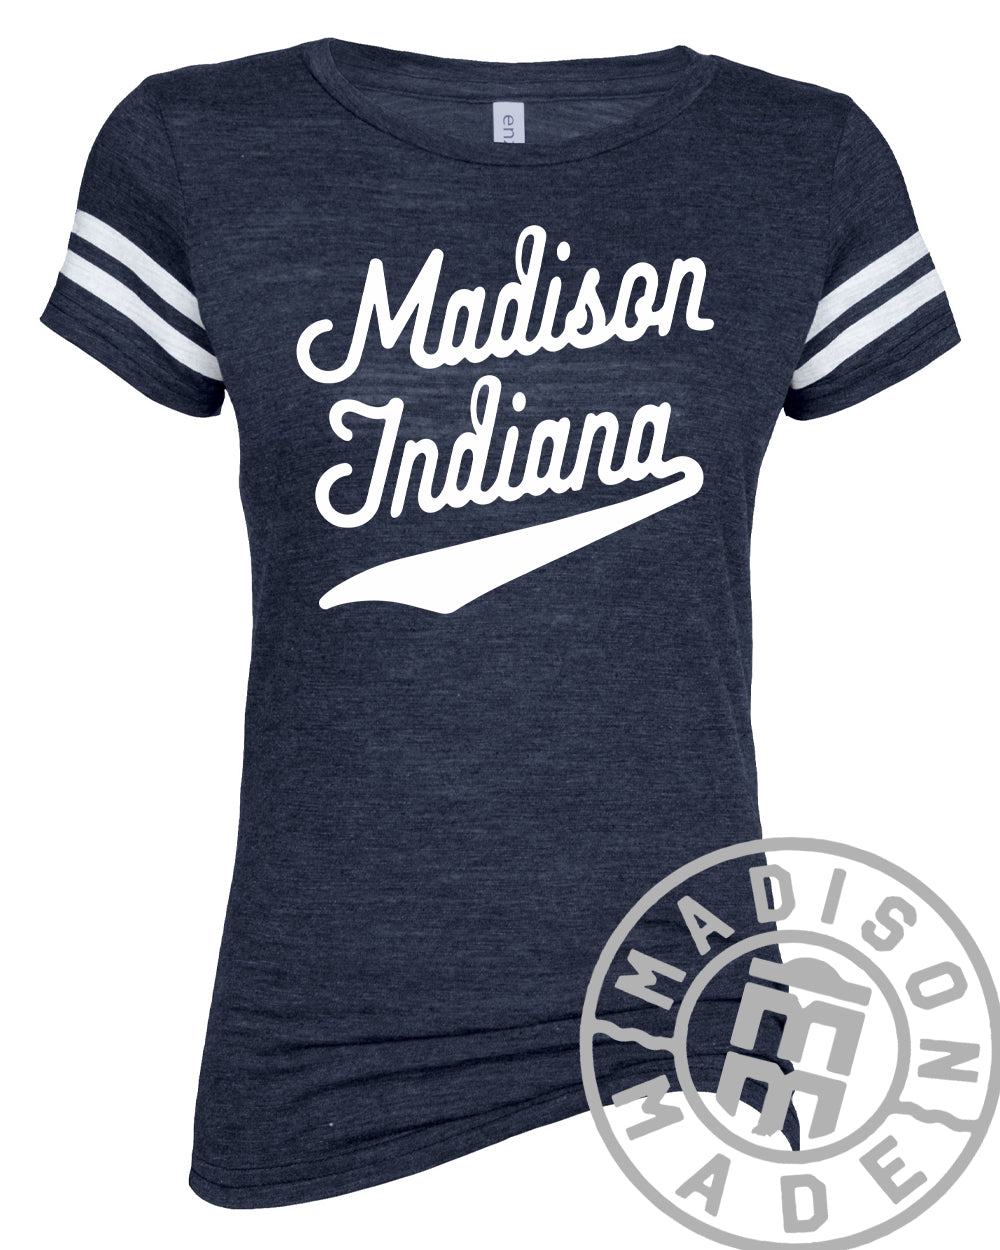 Madison Indiana Women's Vintage Tee